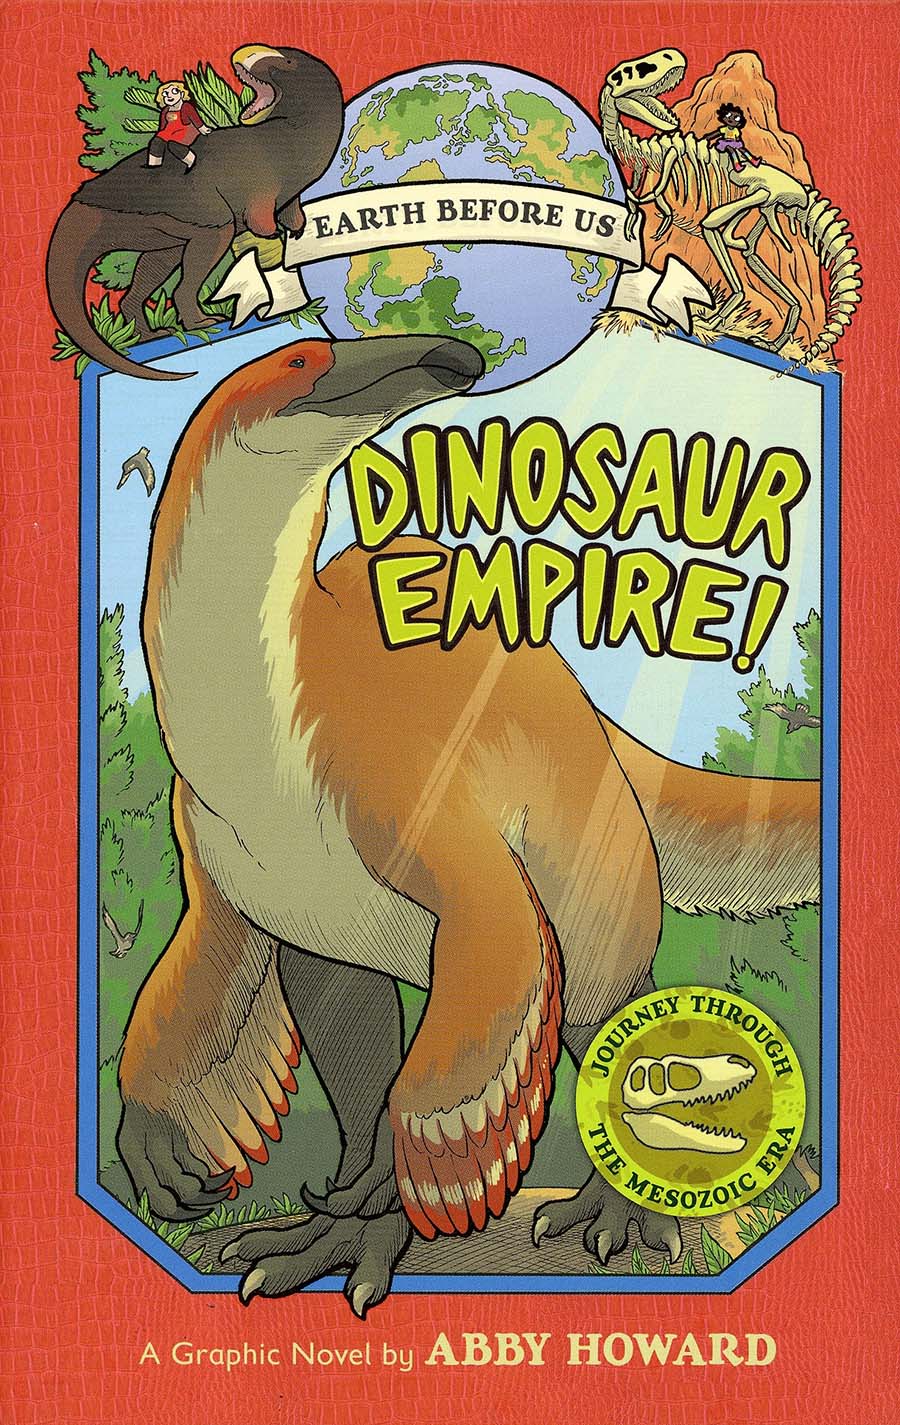 Earth Before Us Vol 1 Dinosaur Empire HC